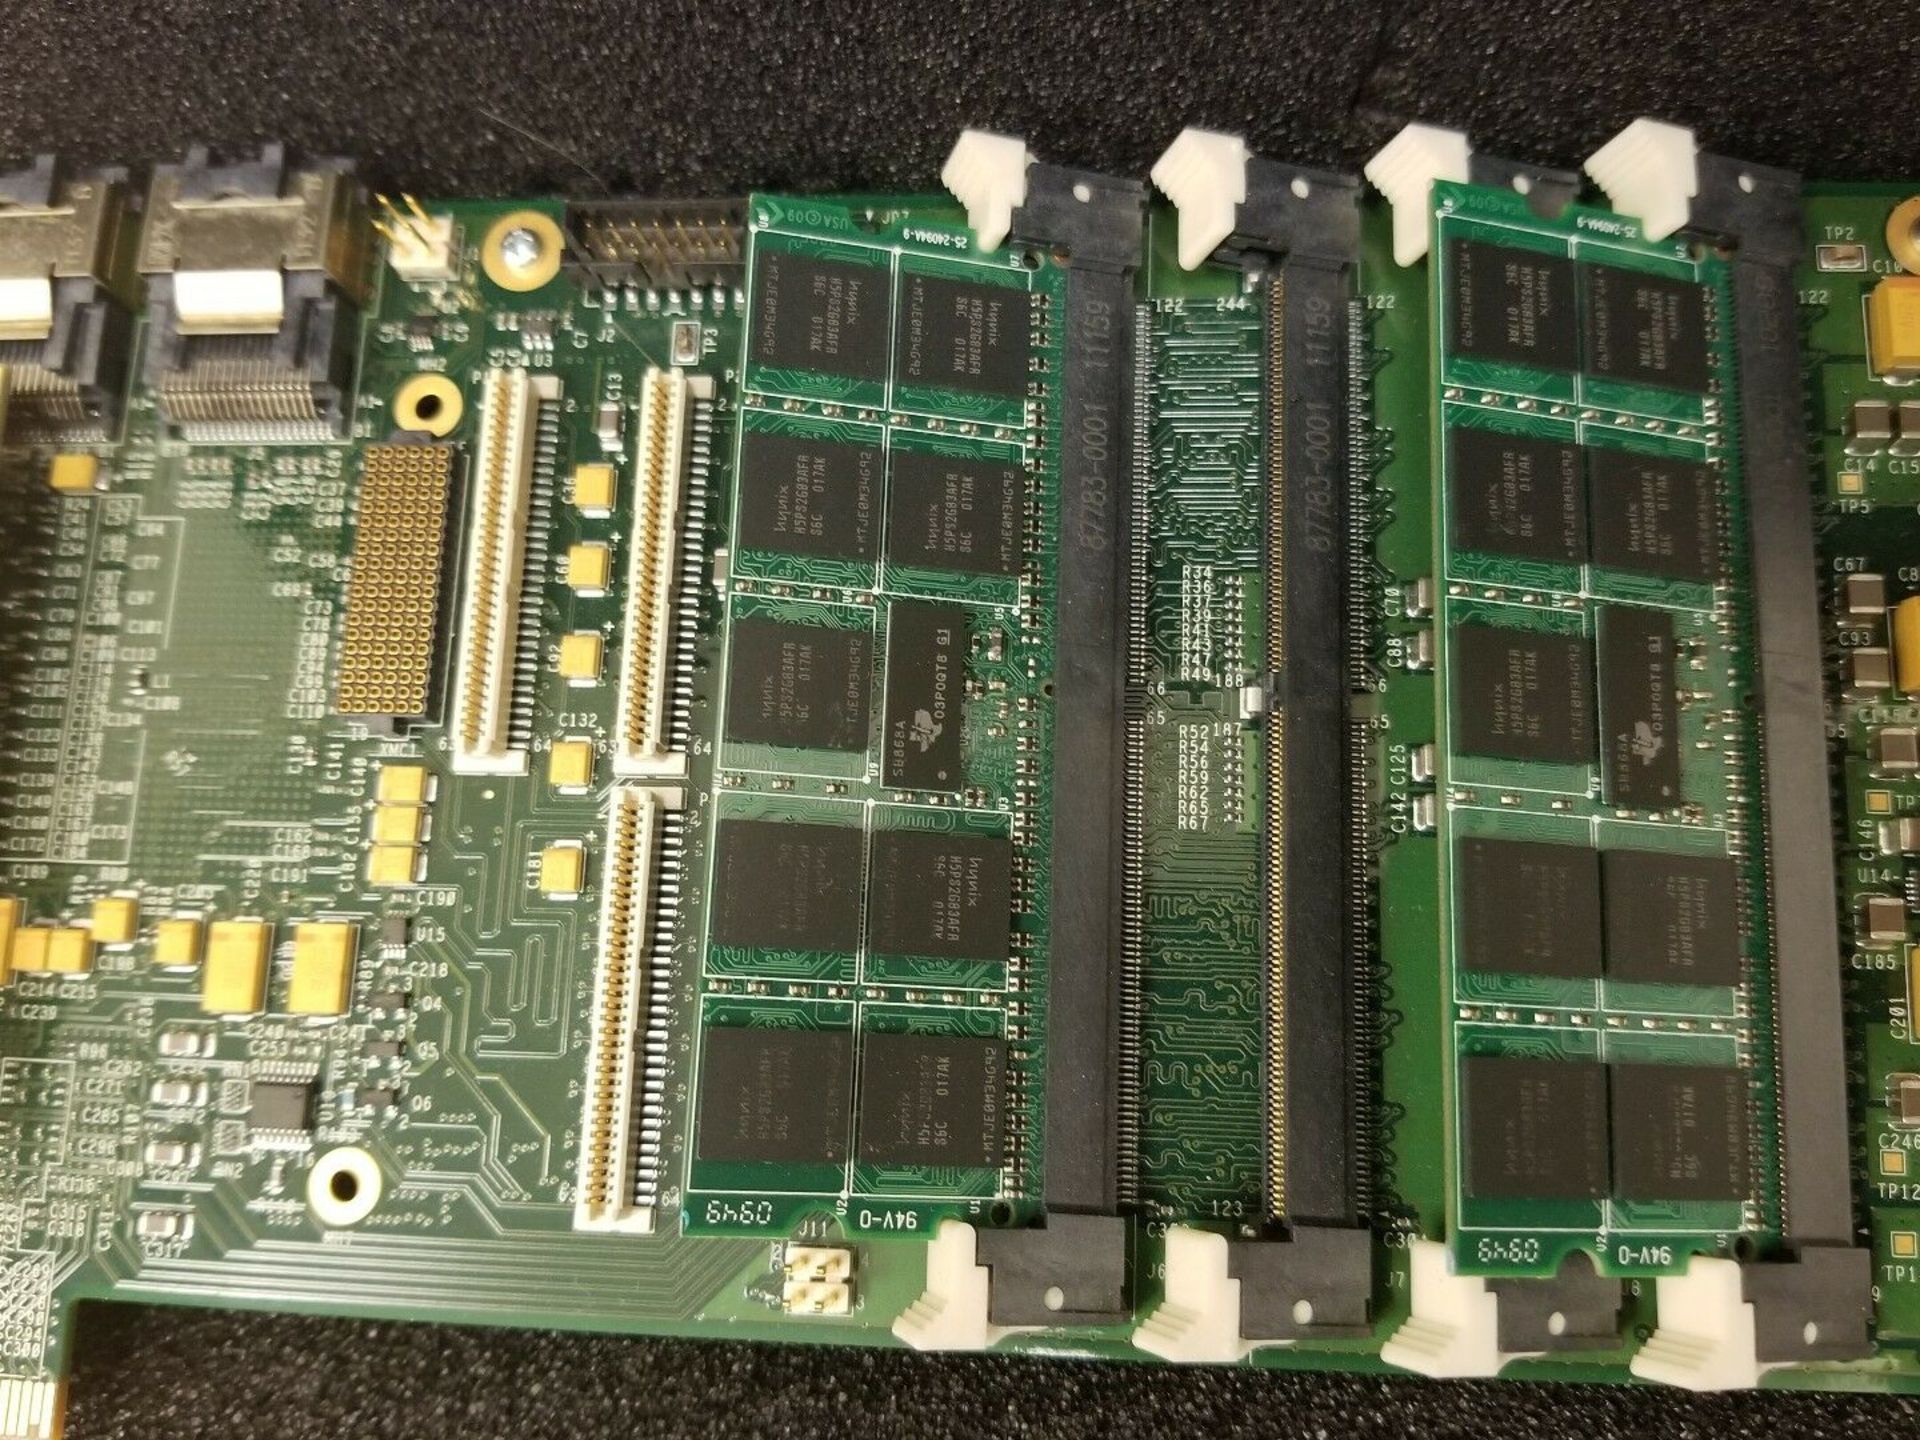 Delphi Engineering Xilinx Virtex FPGA Development Board - Image 4 of 6